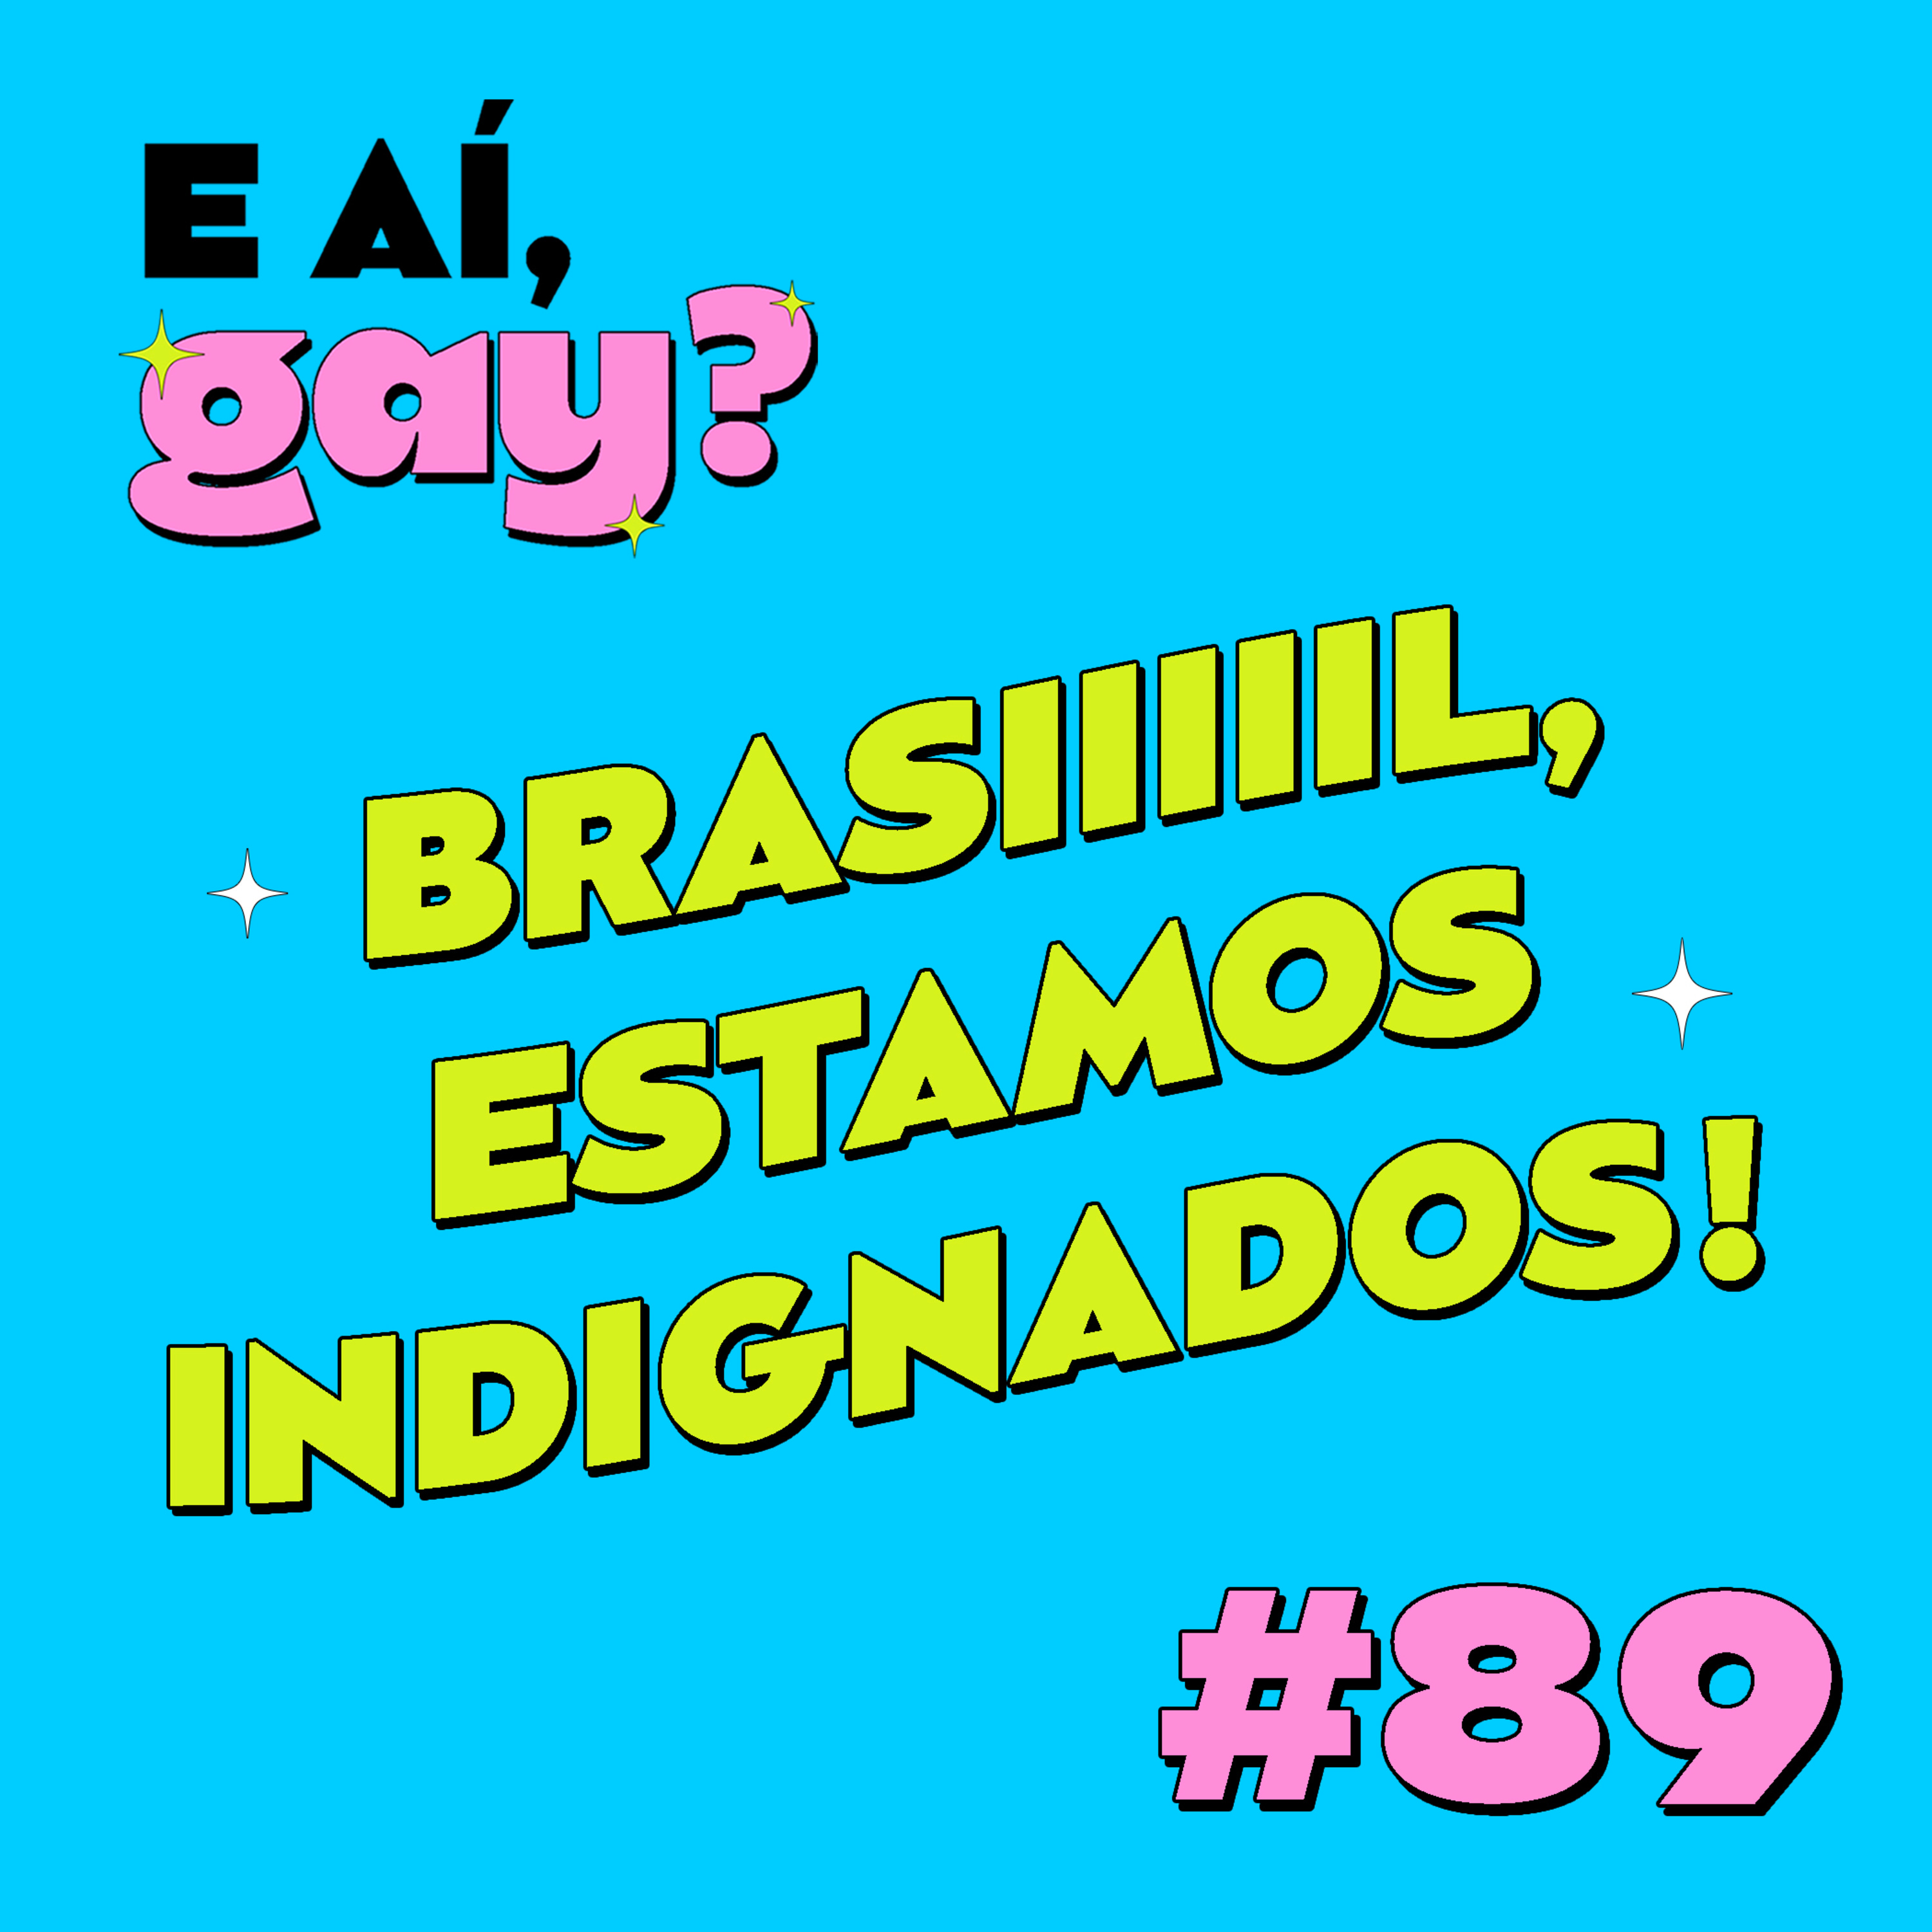 #89 - Brasiiiiil, estamos indignados!